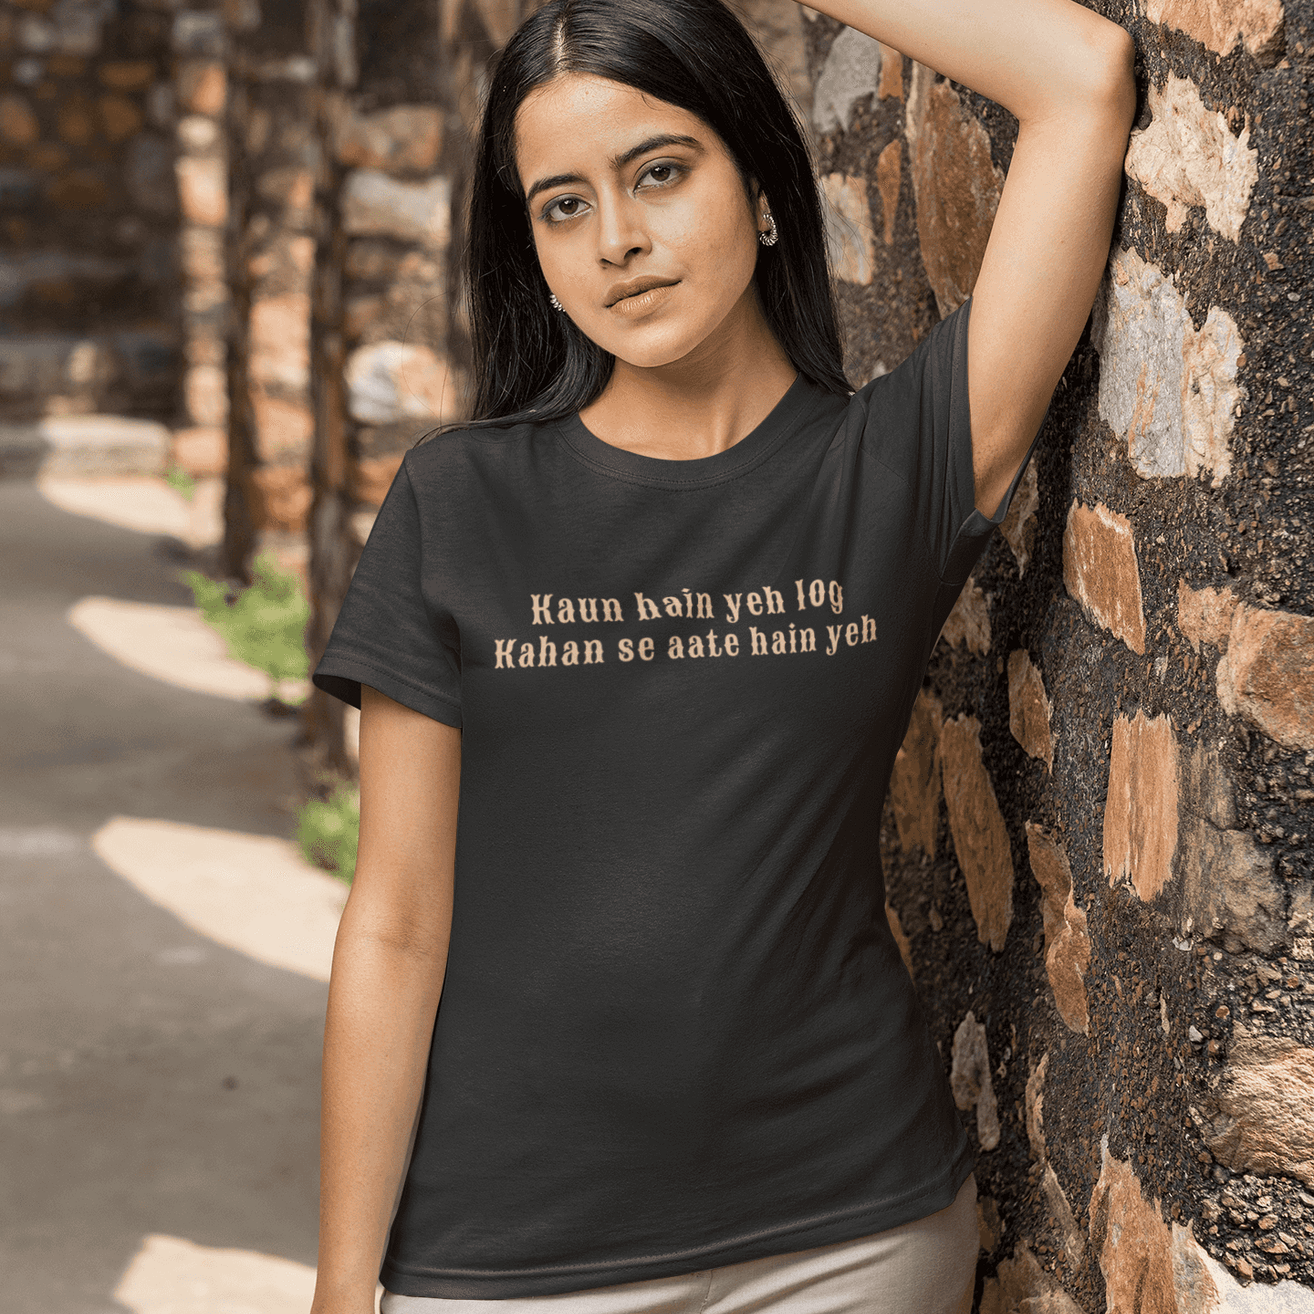 "Kaun Hain Yeh Log Kahaan Se Aate Hain Yeh" Women's Graphic T-Shirt - Mystery Unveiled